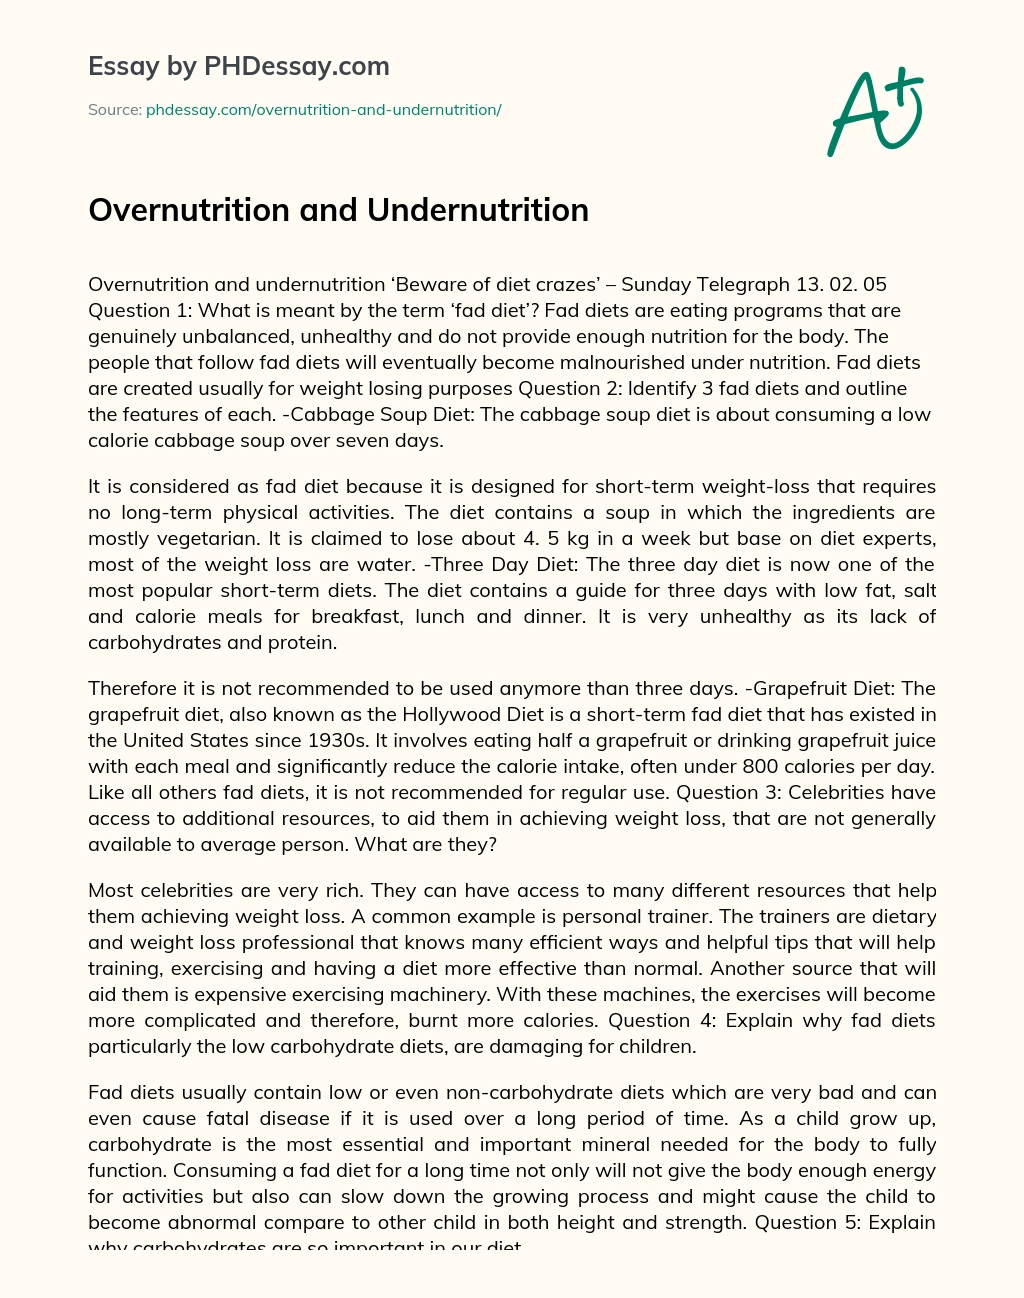 Overnutrition and Undernutrition essay